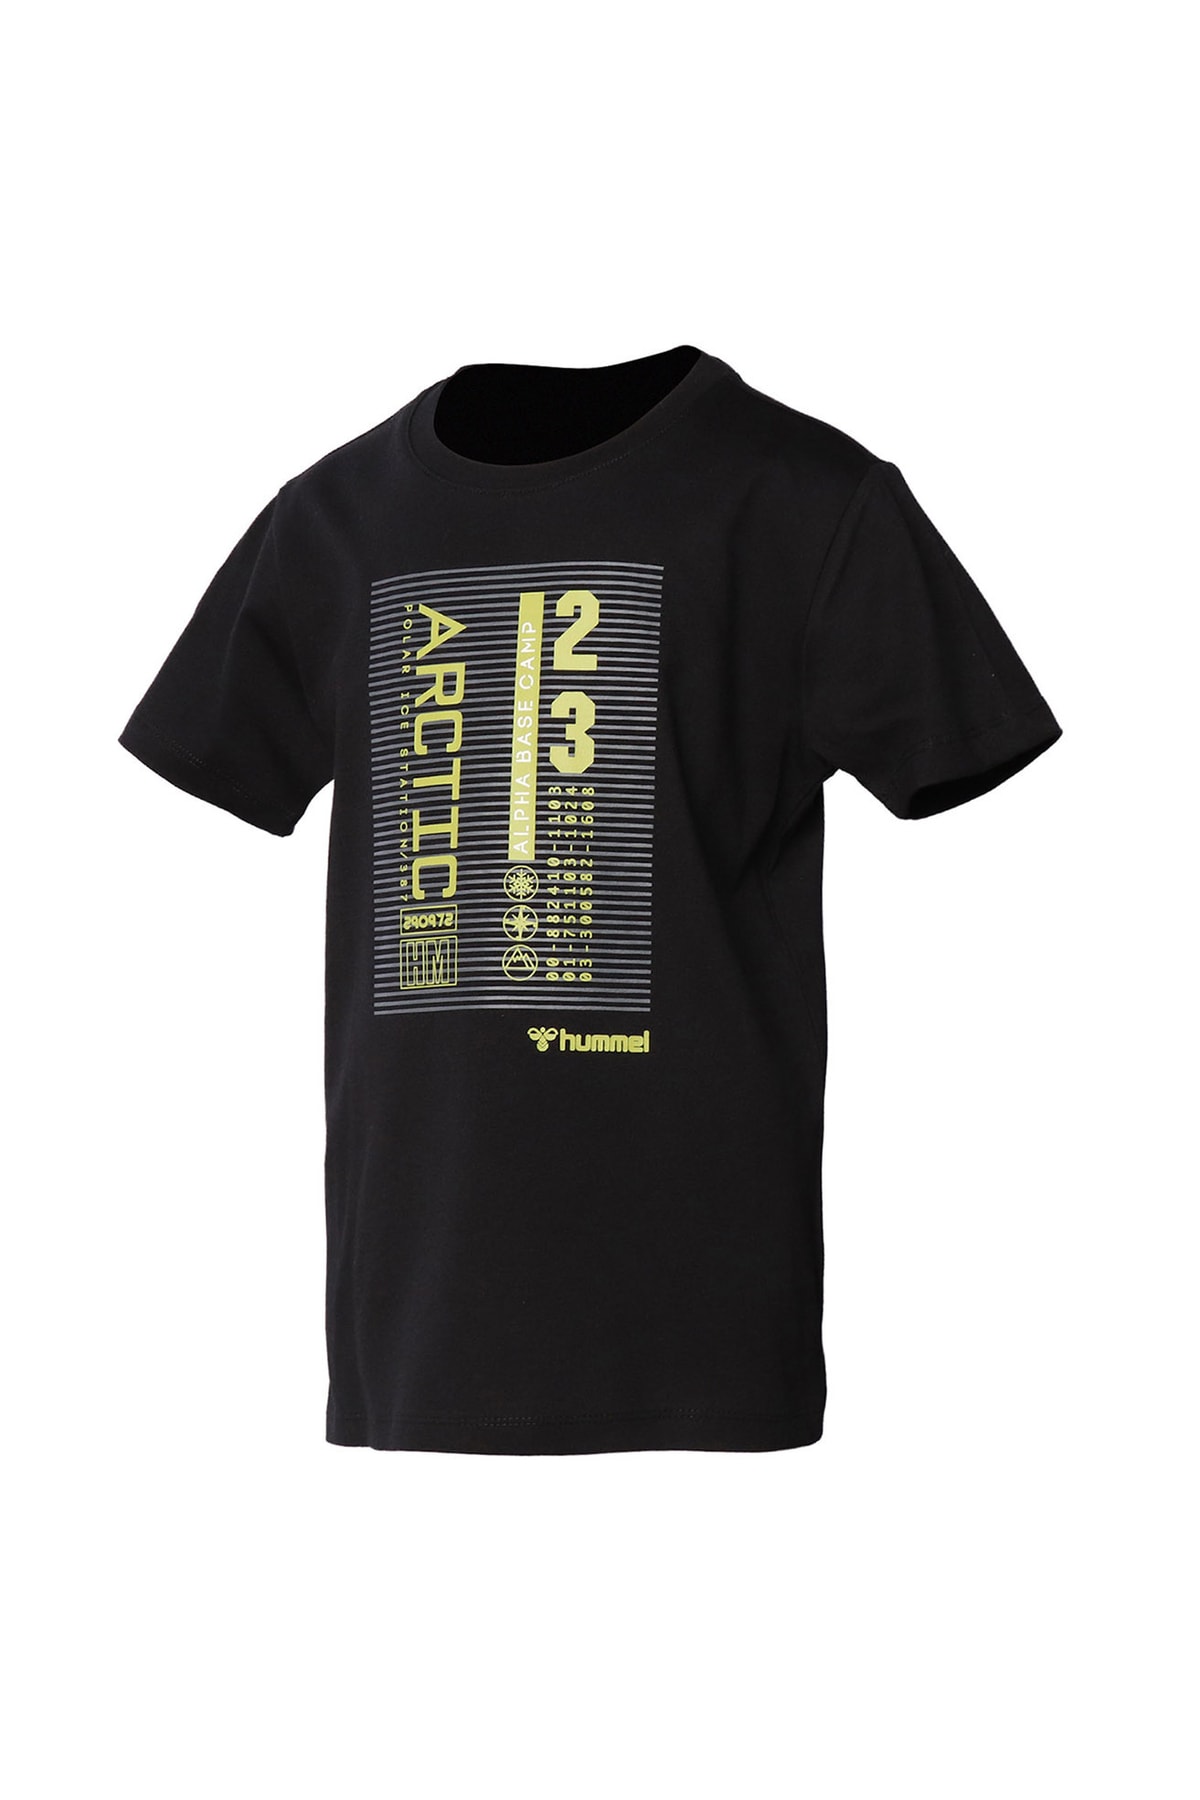 hummel تی شرت مرد سیاه چاپ شده 911580-2001 HMLGORM S/S